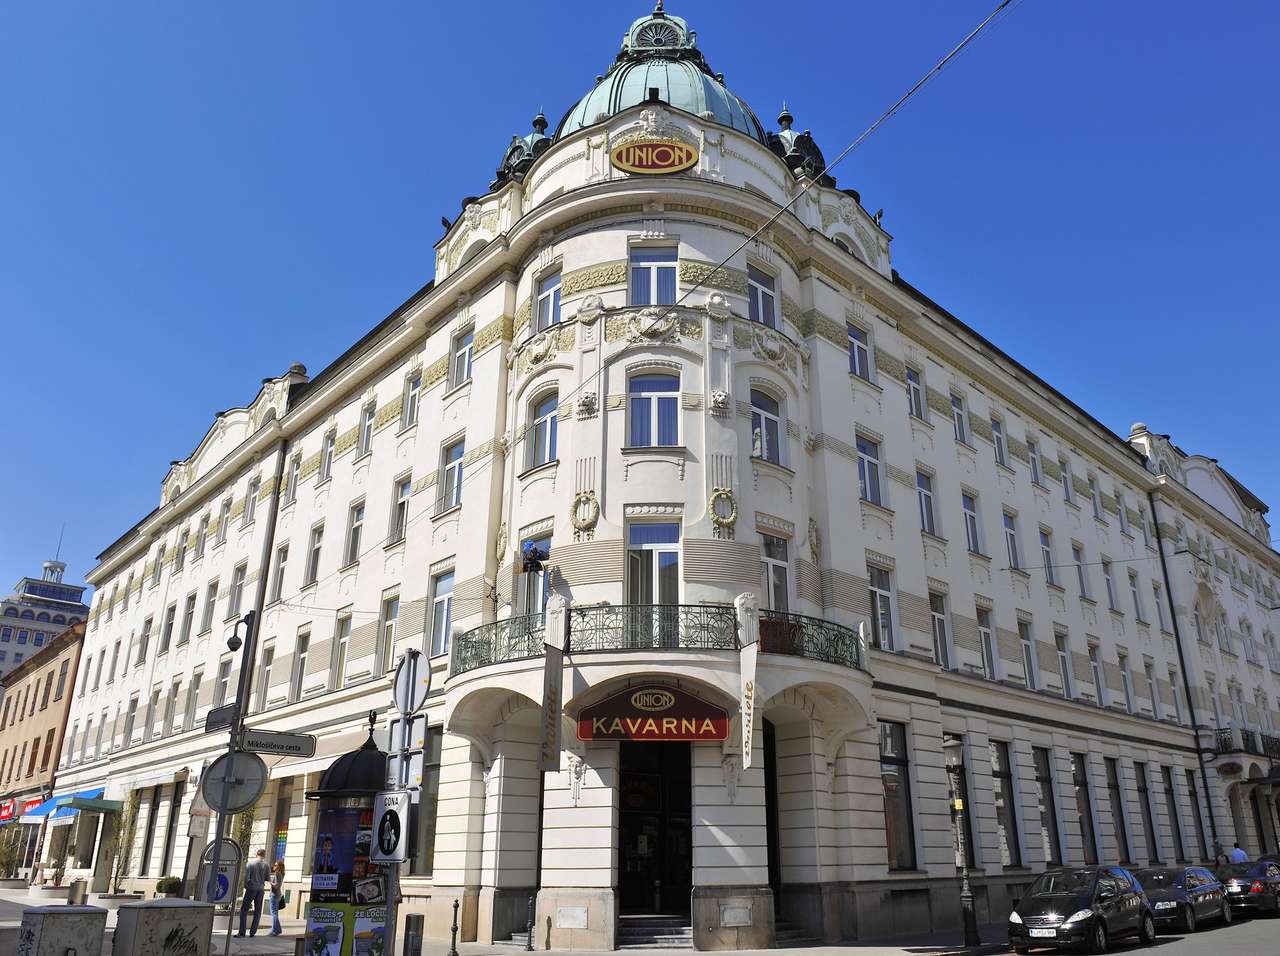 Ljubljana Grand Hotel Union Slowenien Online-Puzzle